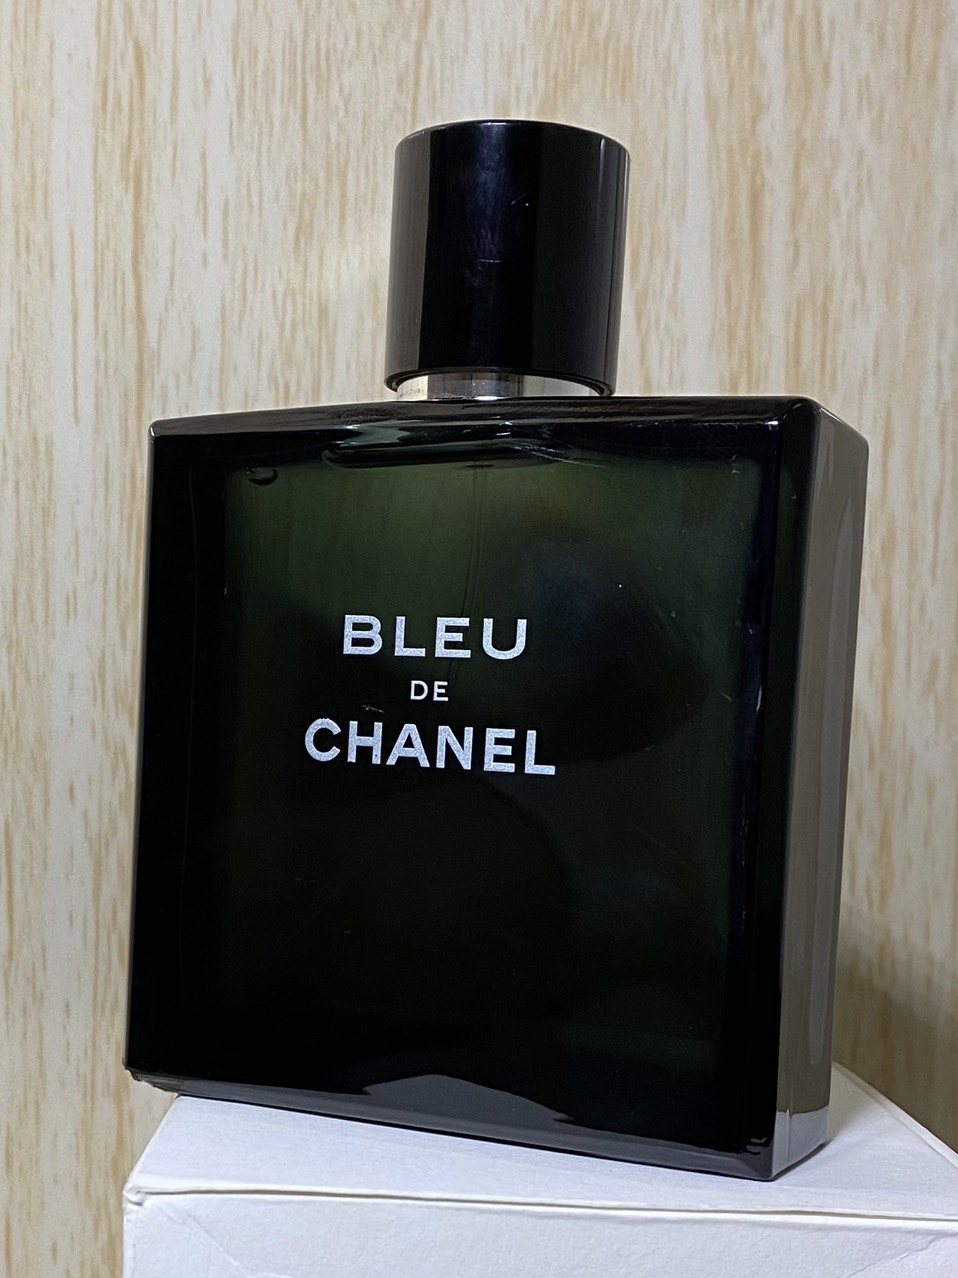 Chanel Bleu Parfum Duty Free Store  azccomco 1692116940